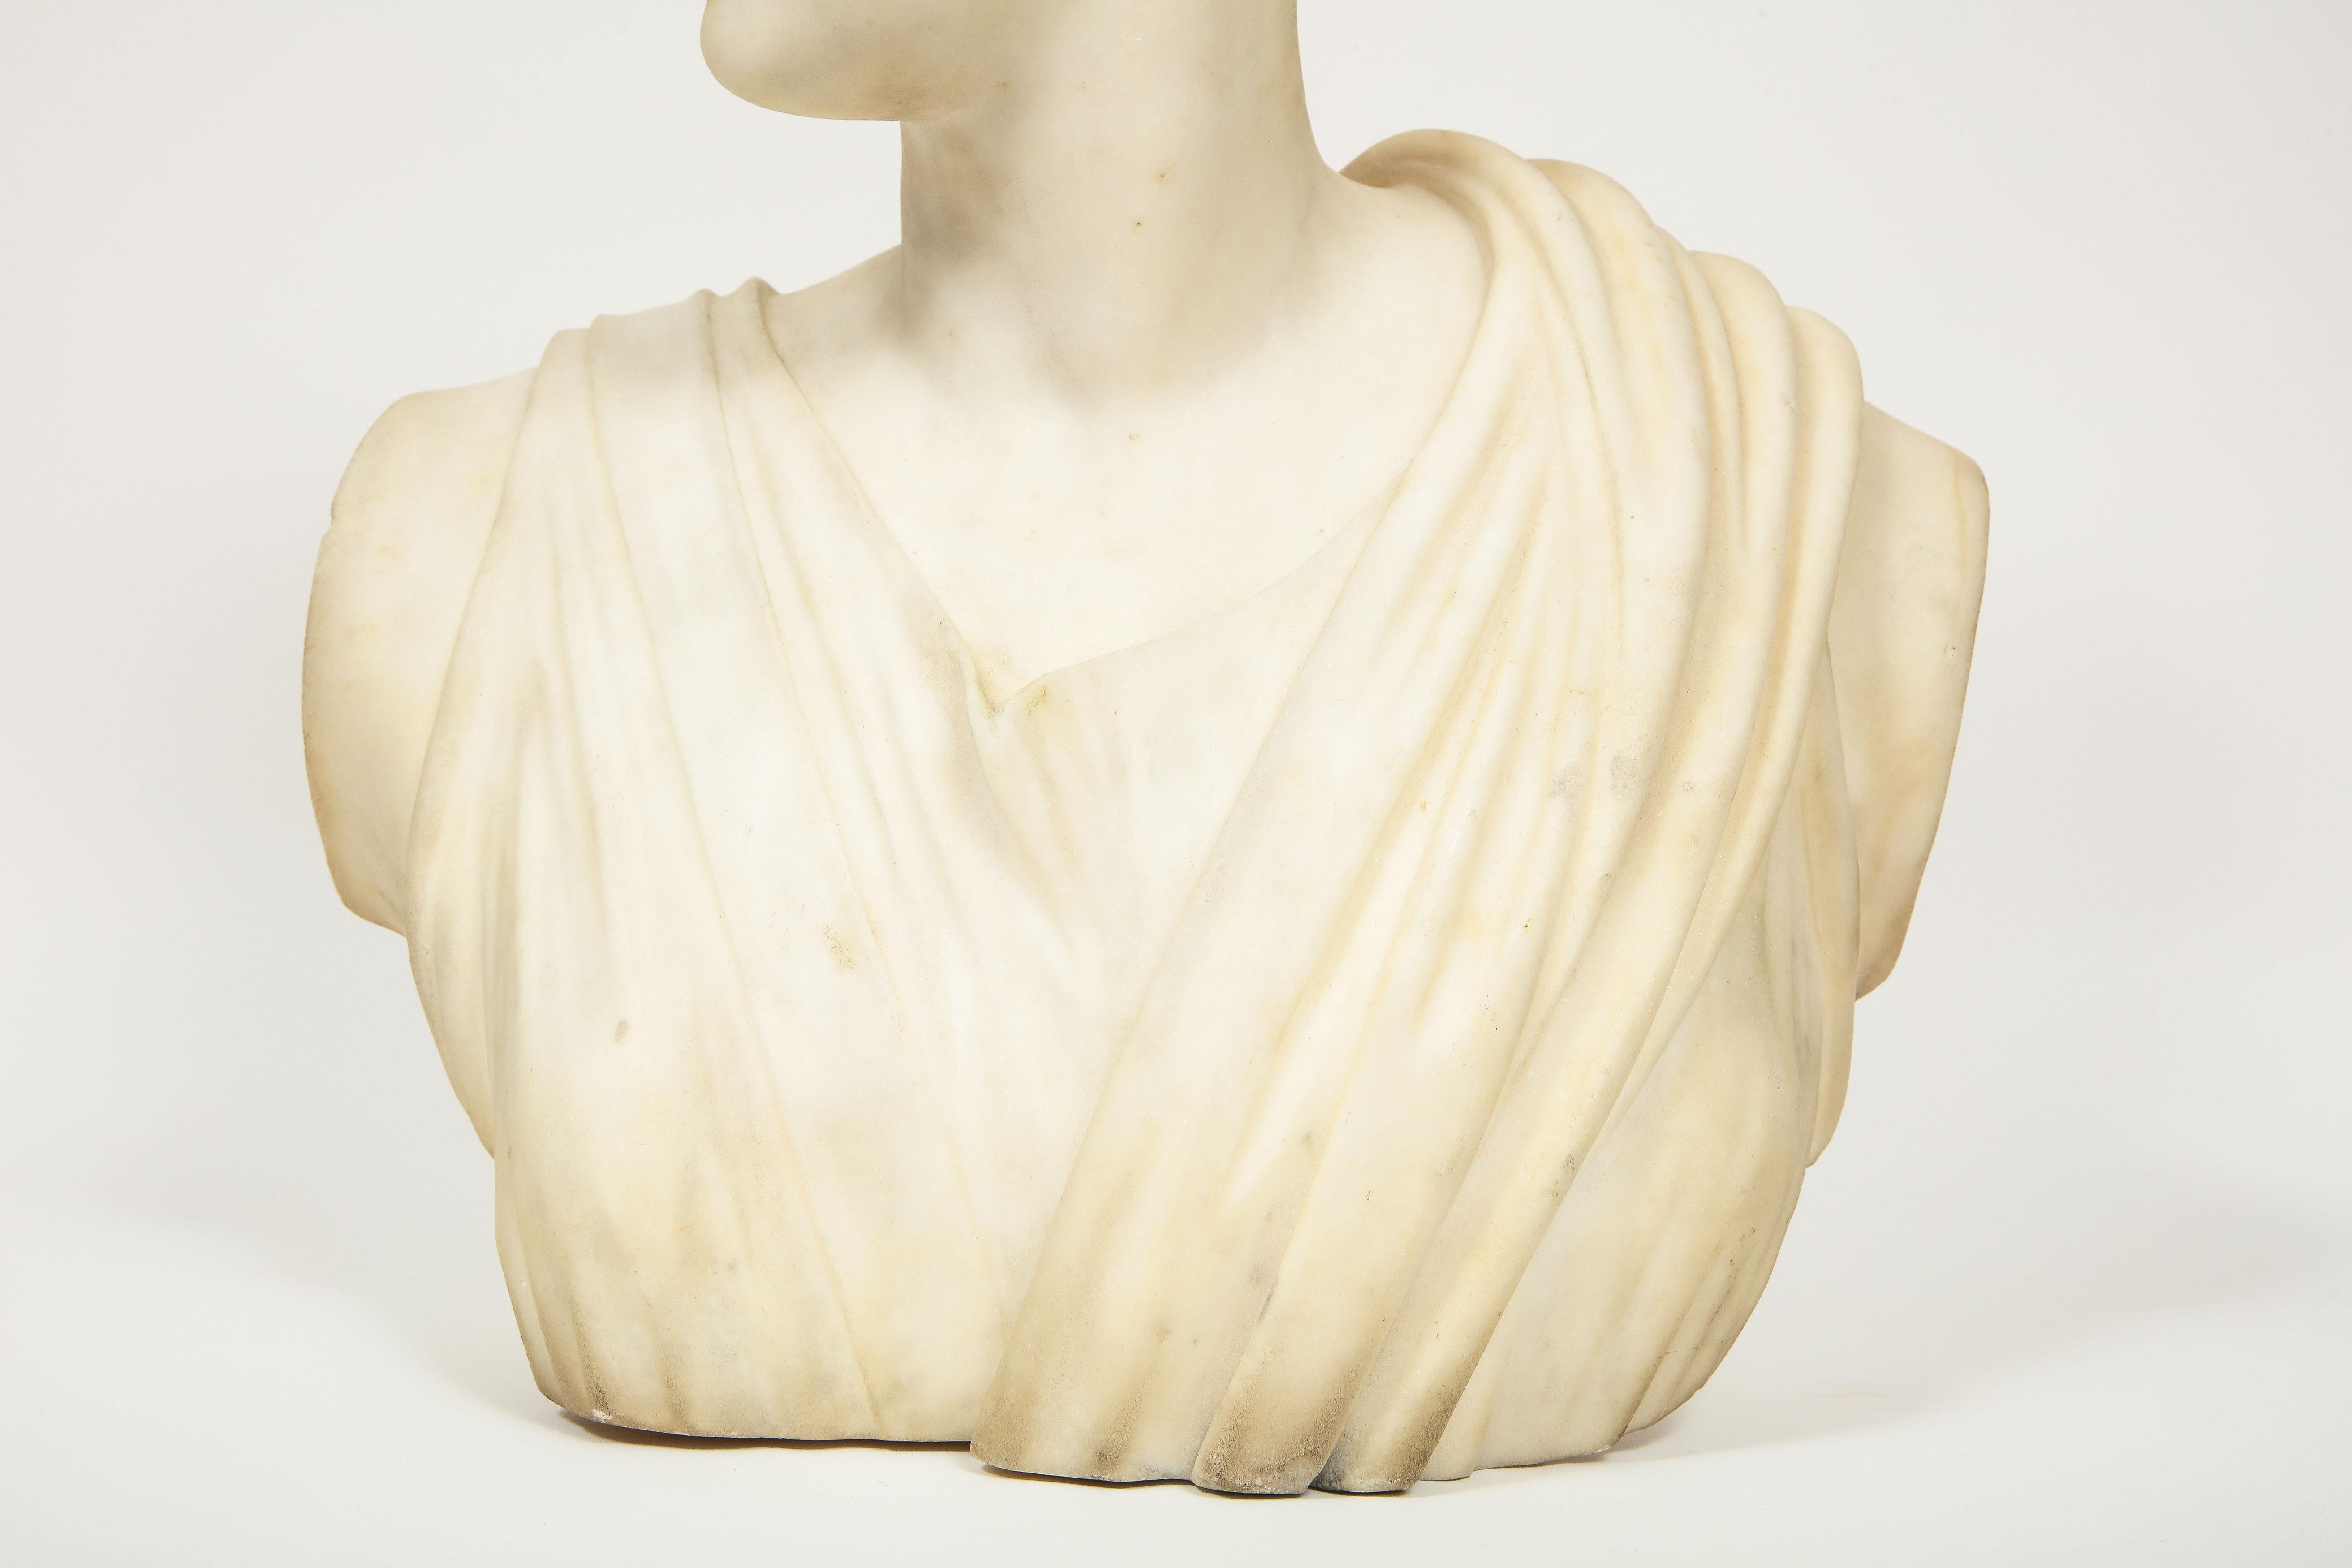 'Italian School, 19th Century' A White Marble Bust of Goddess Diana Artemis 2